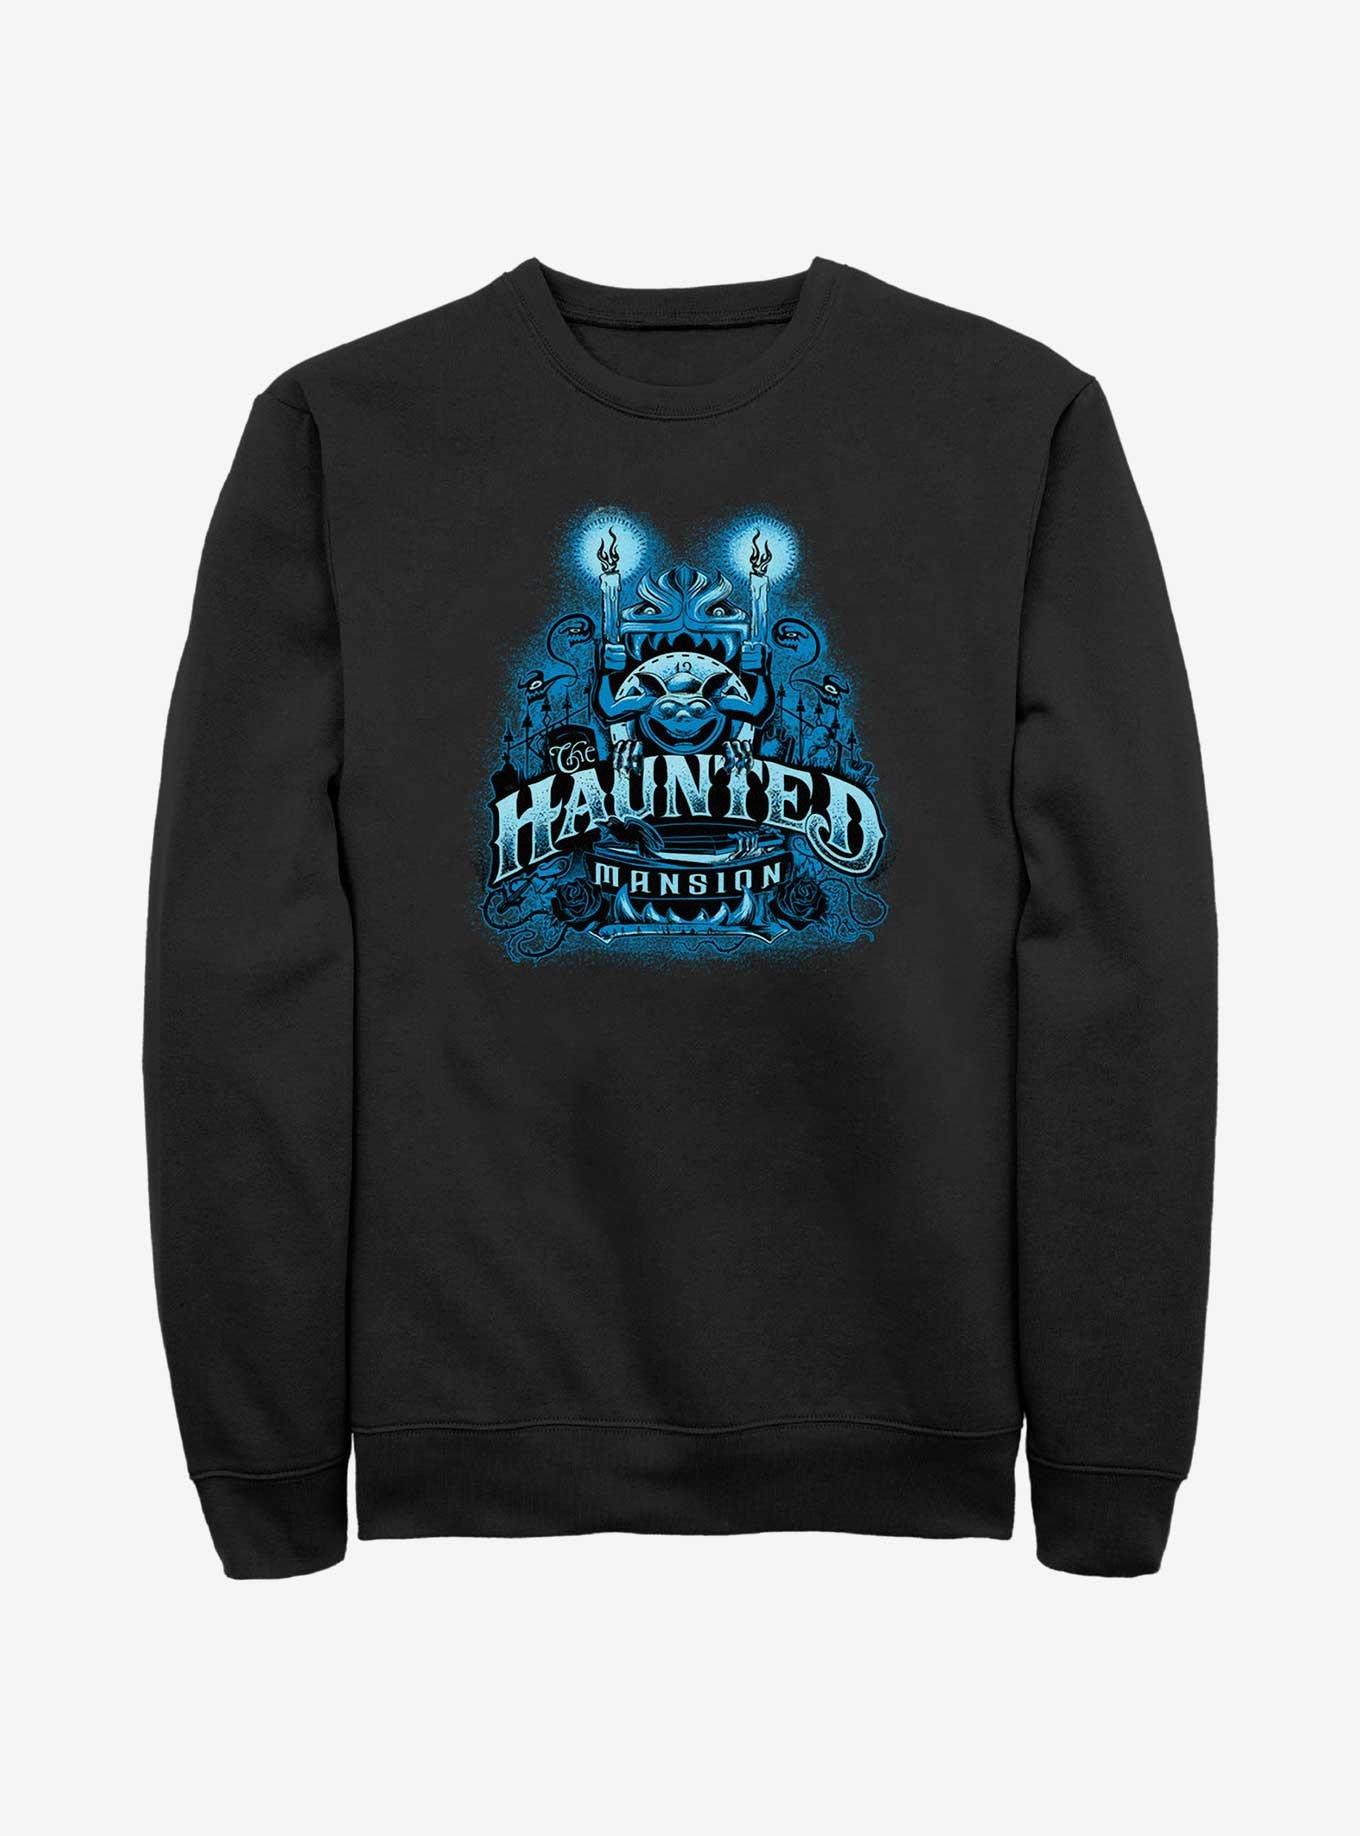 Disney Haunted Mansion Haunted Gargoyle Candles Sweatshirt, BLACK, hi-res